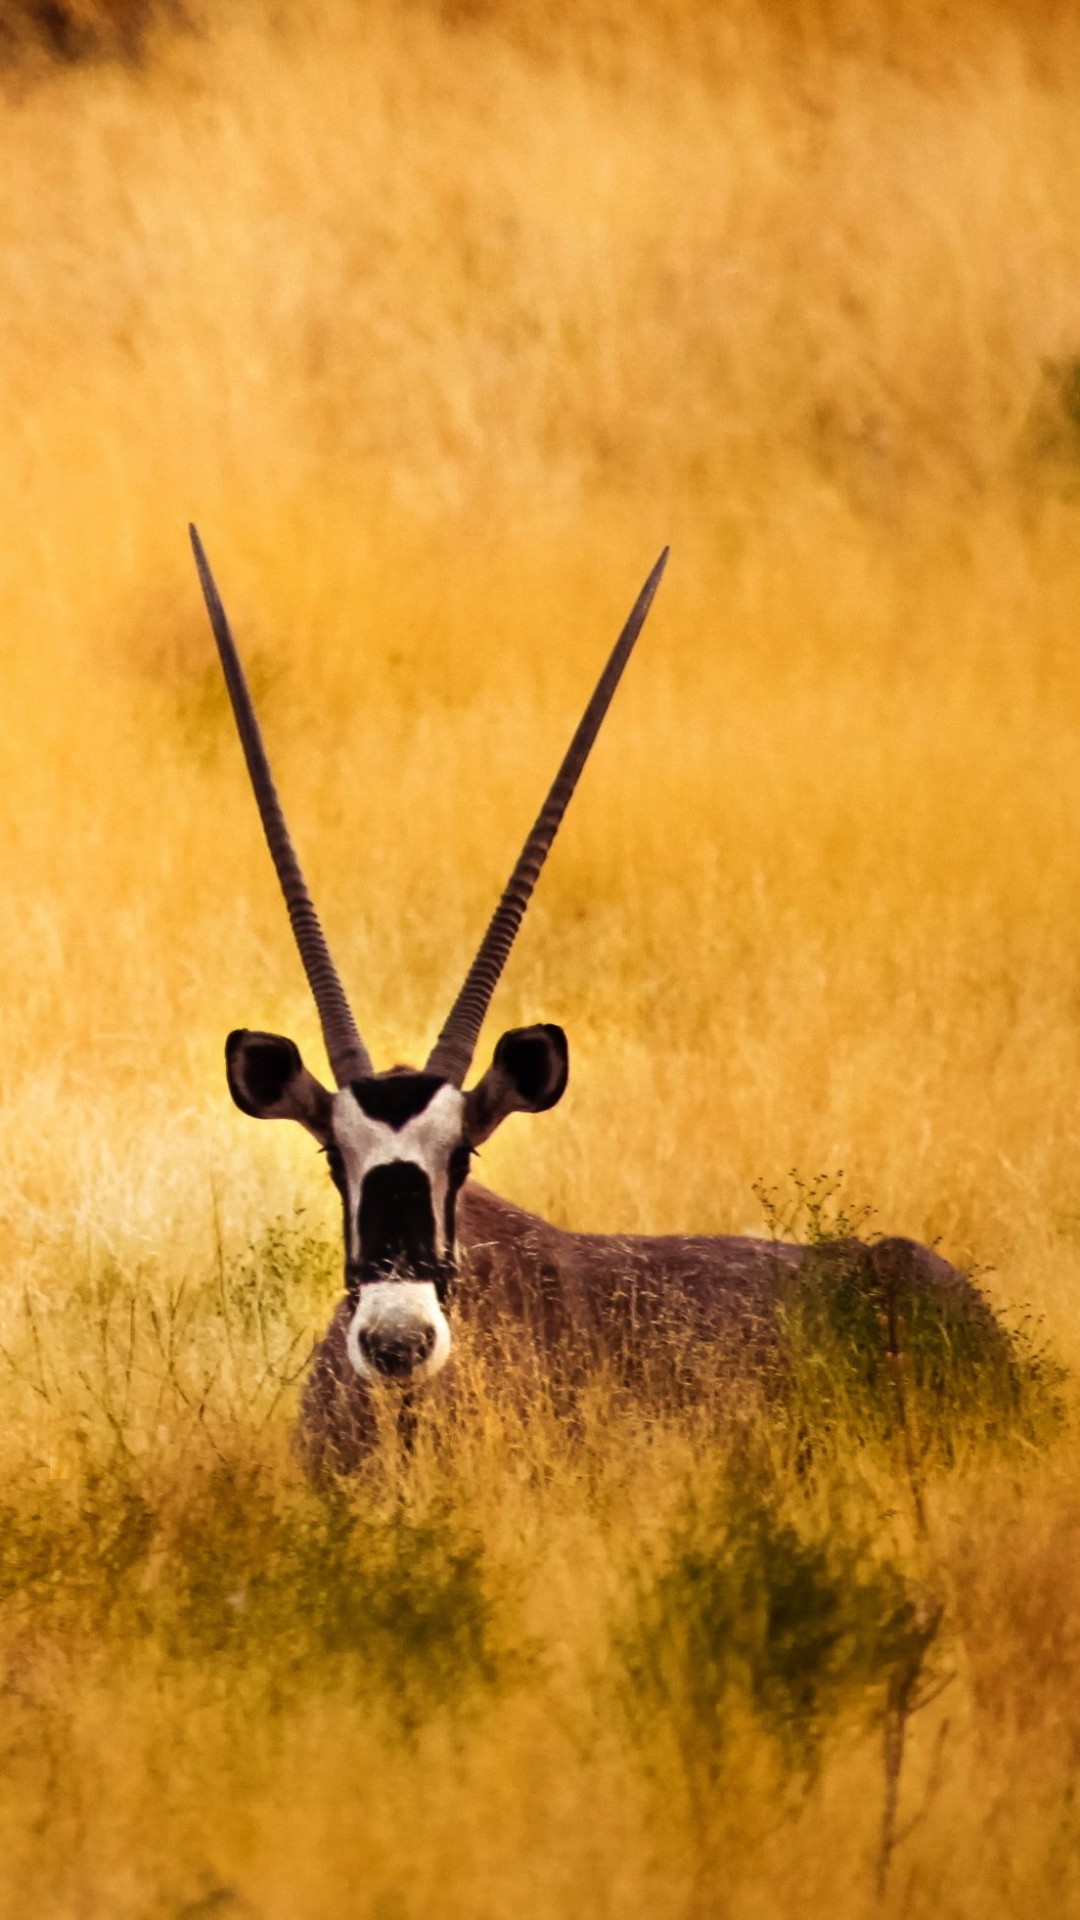 Antelope In The Savanna Wallpaper for LG G2